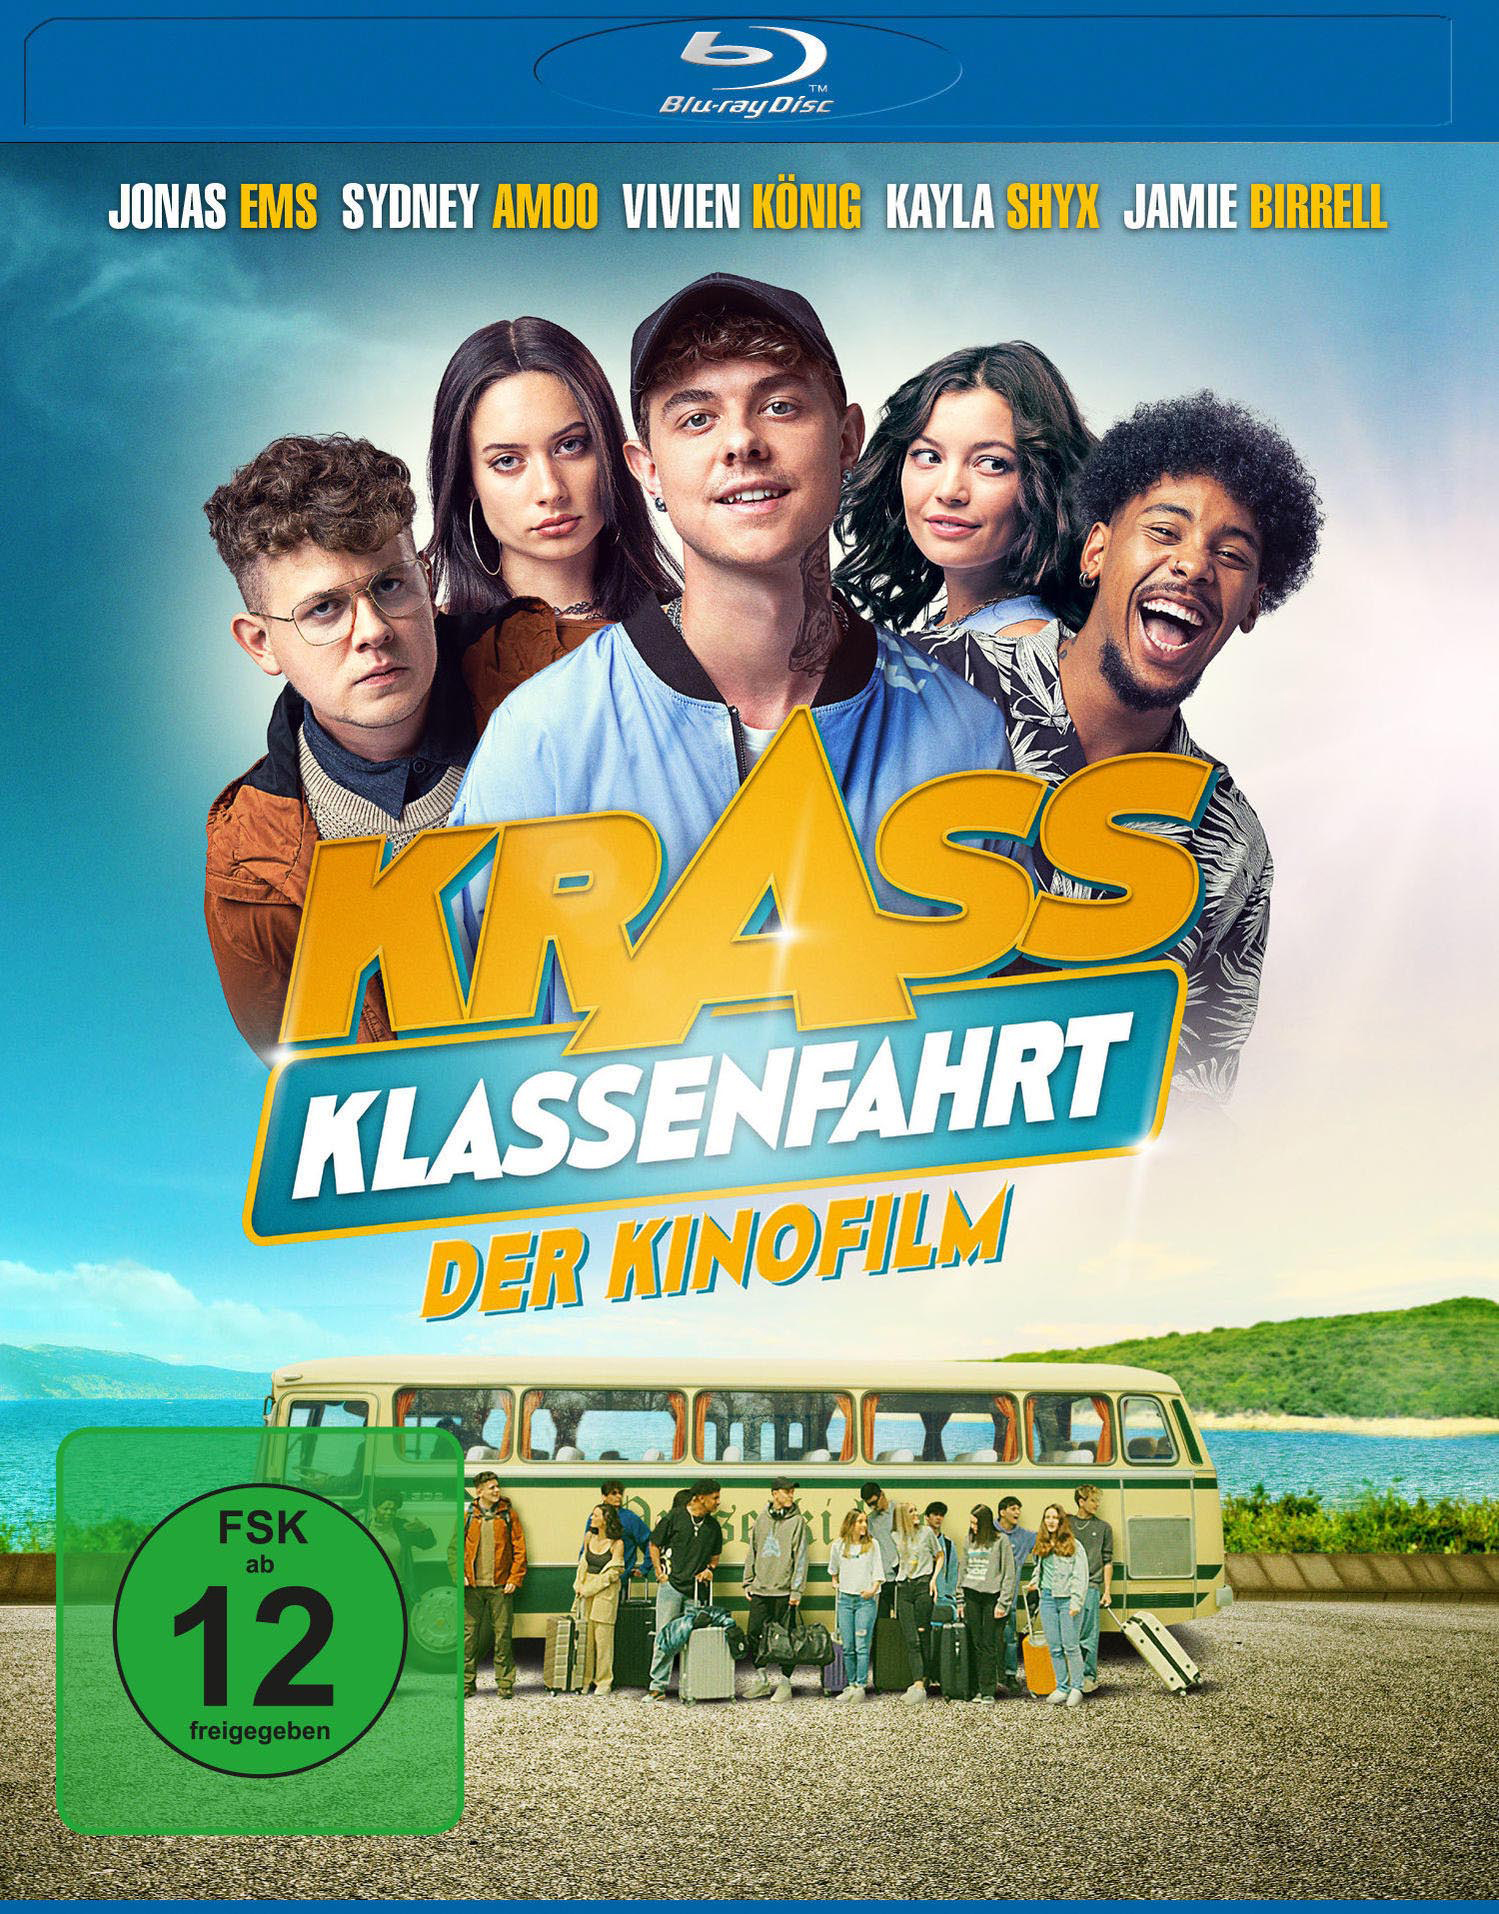 Blu-ray Kinofilm Der Klassenfahrt - Krass